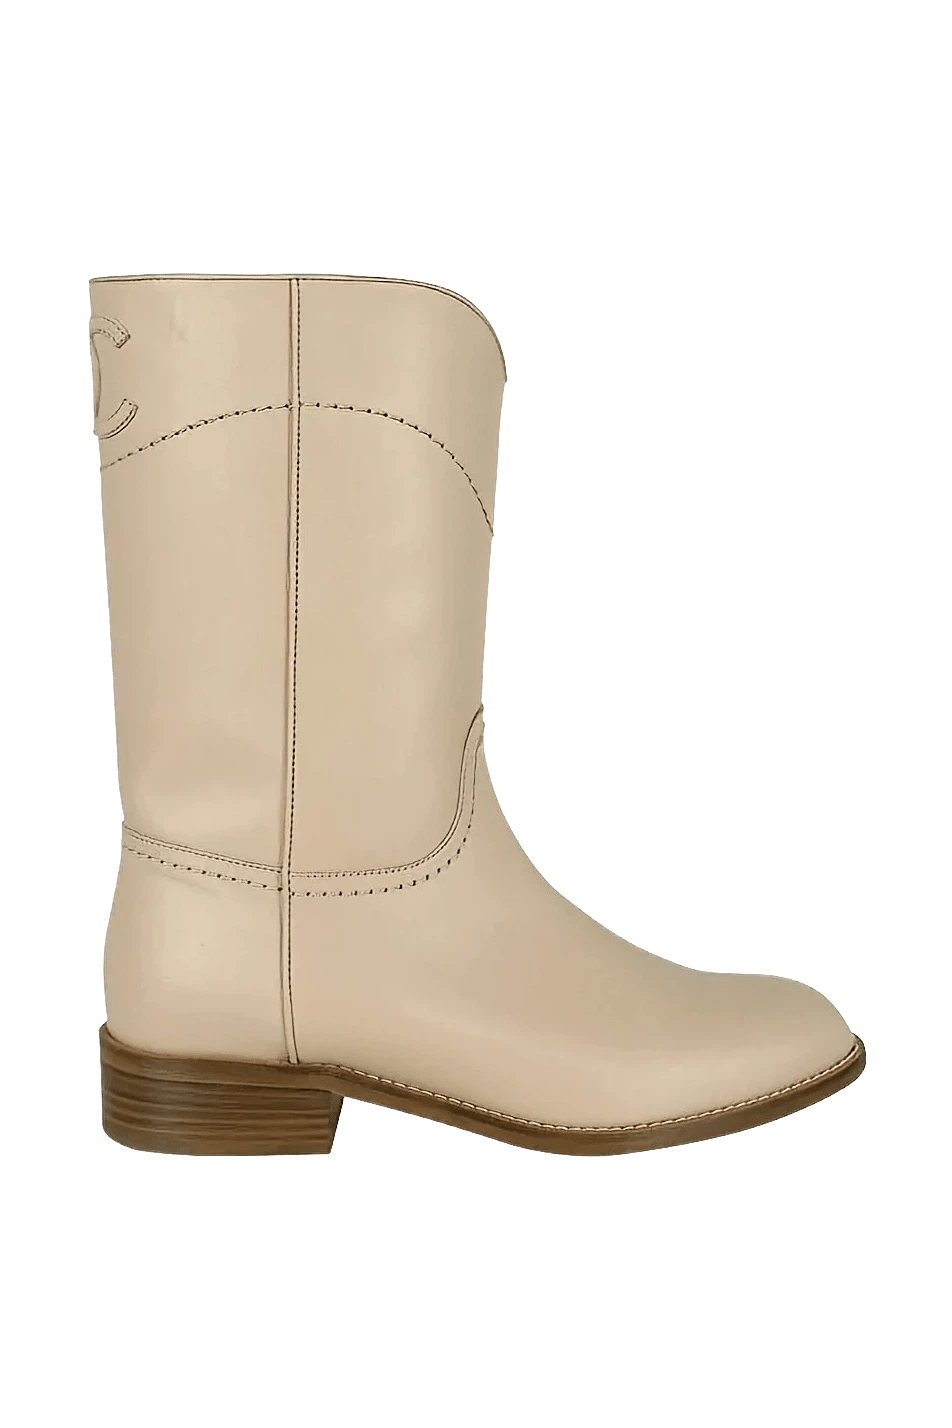 Chanel Beige Half Height Cowboy Boots 6.5